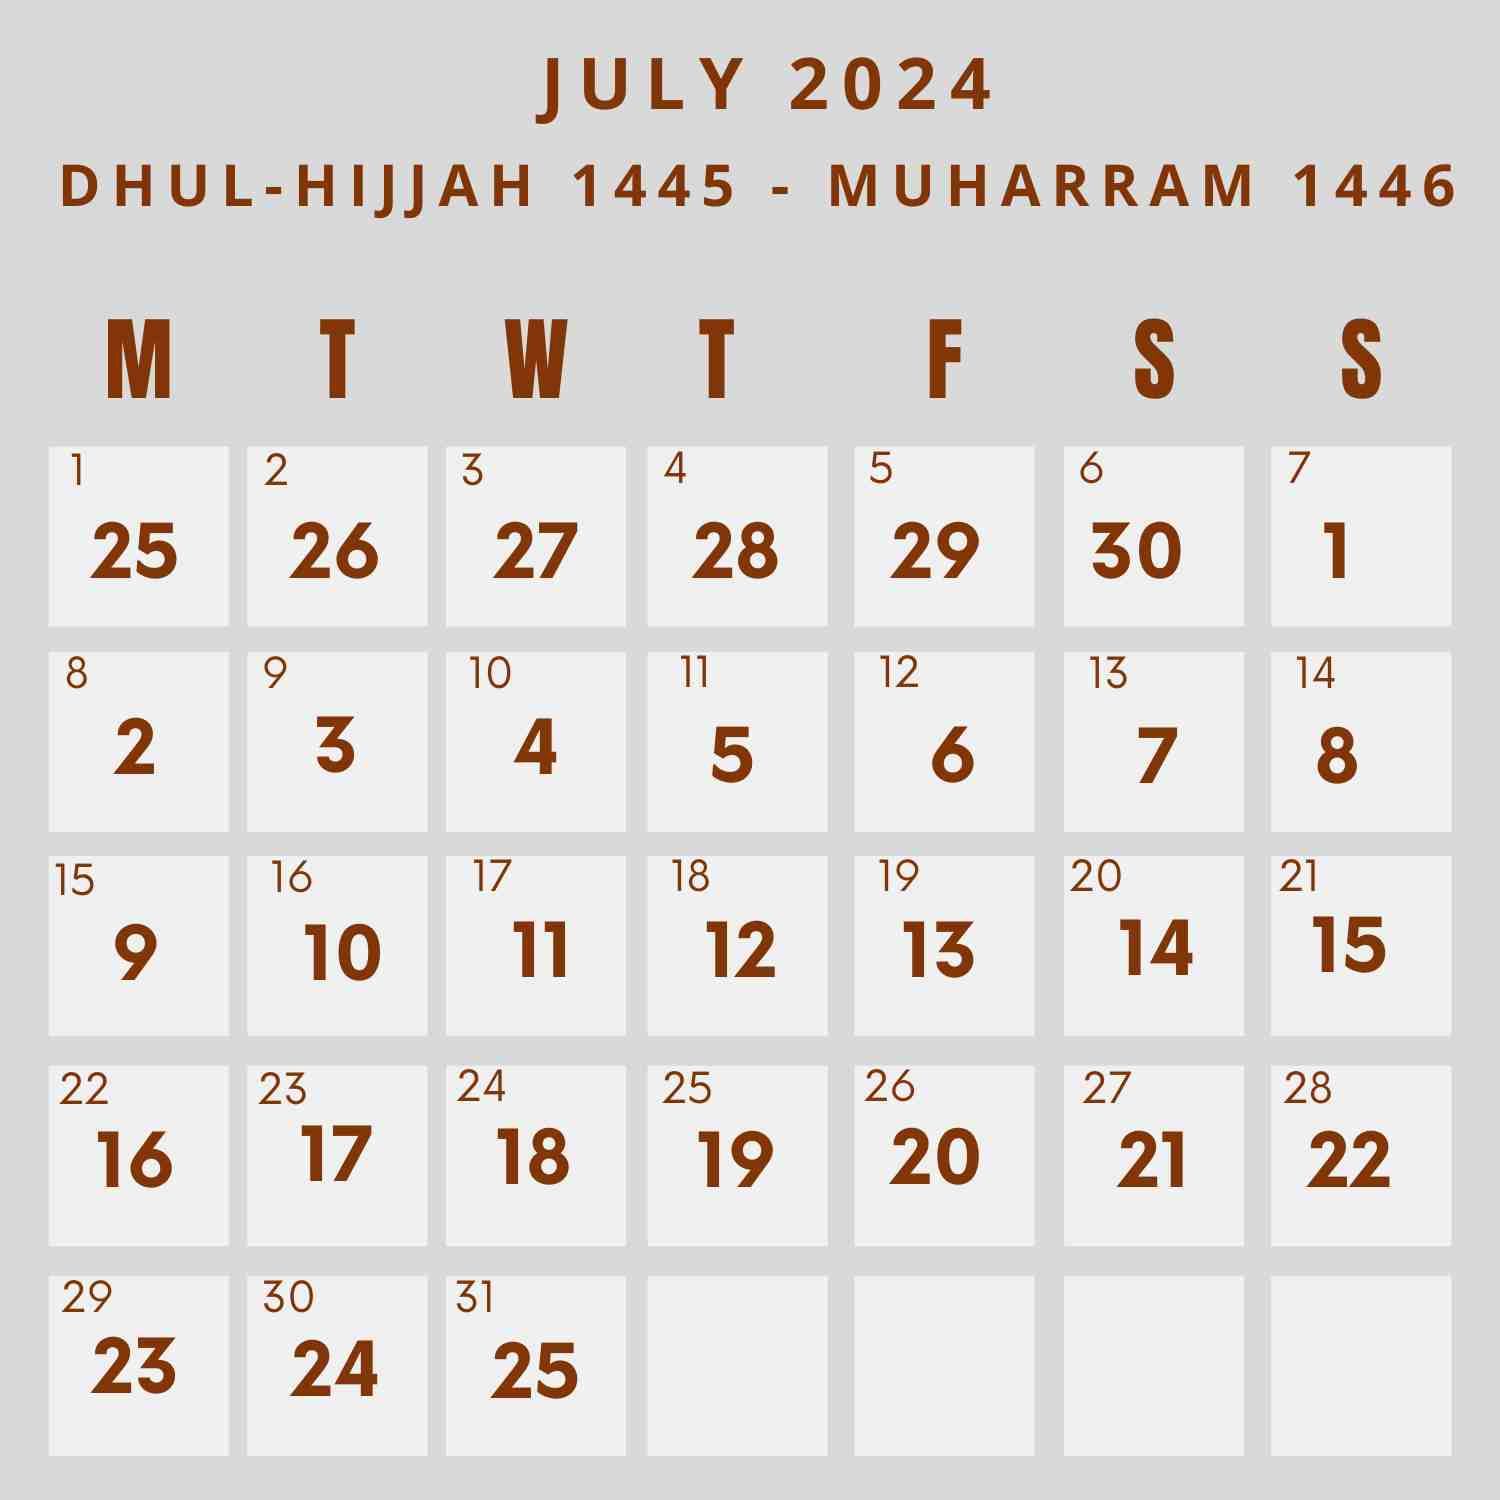 Islamic Calendar 2024 - Khwajadarbar inside 2 July 2024 In Islamic Calendar